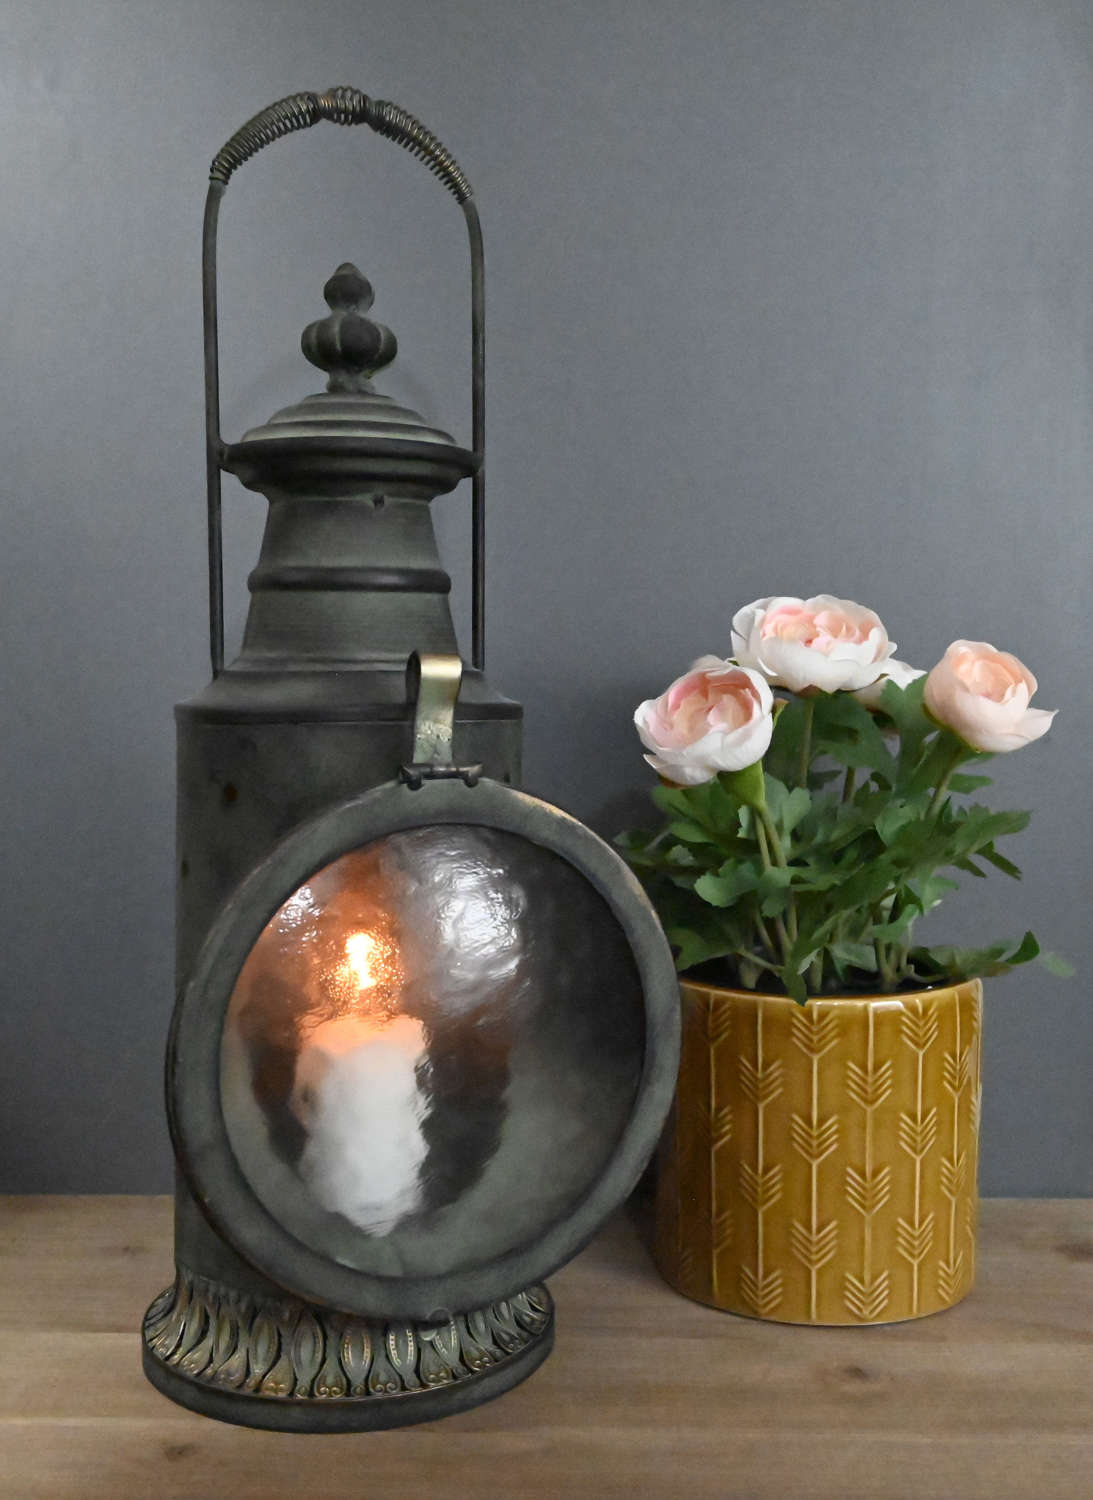 Vintage style railway lantern candle holder.